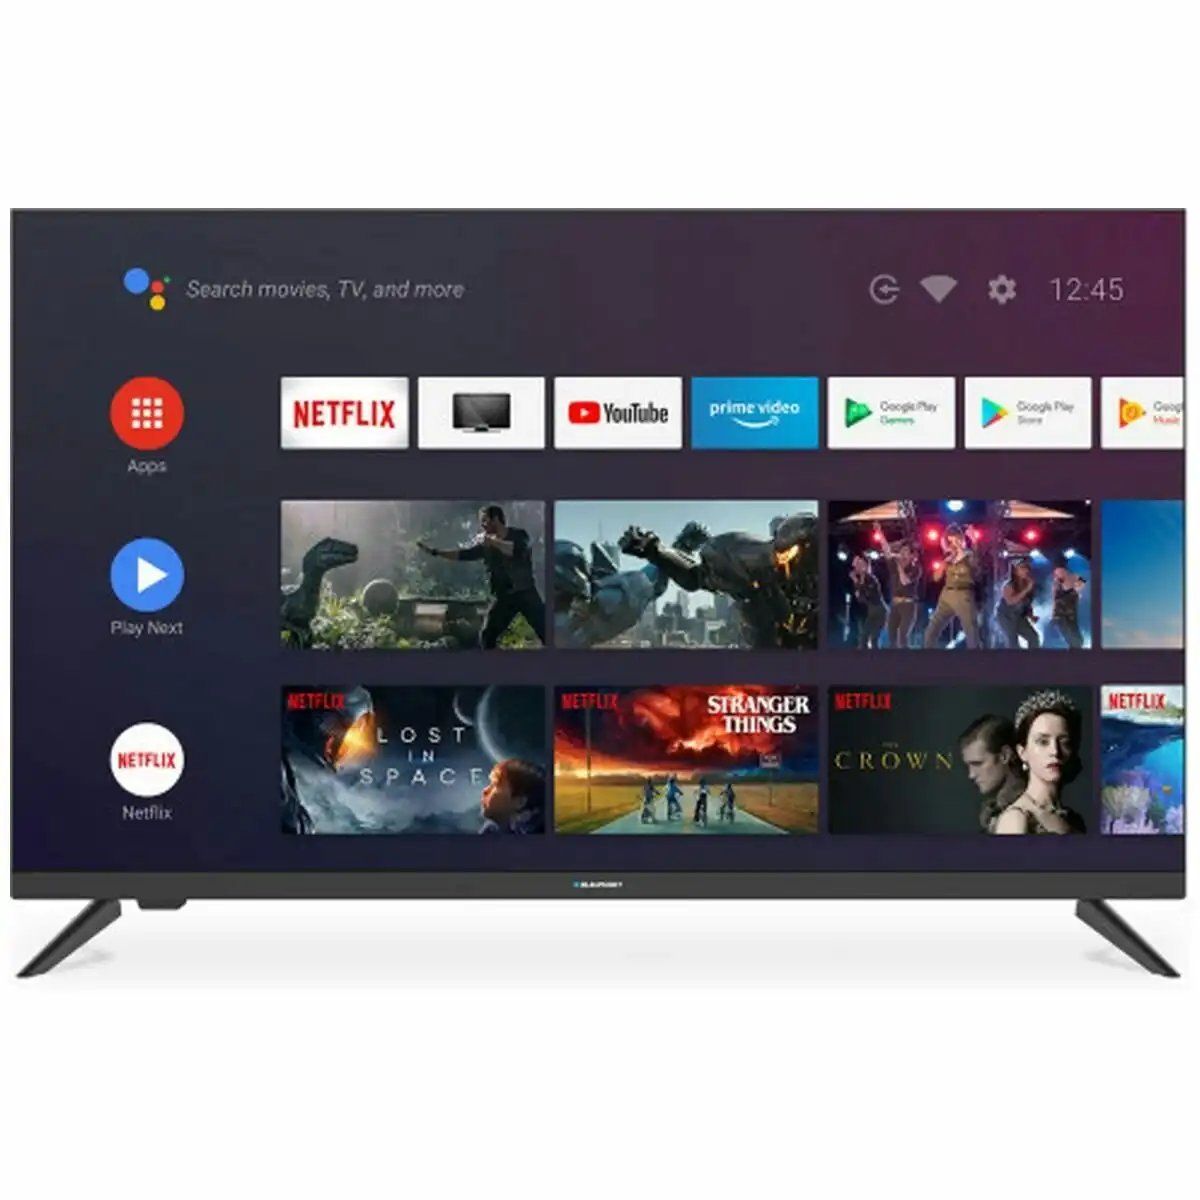 Blaupunkt 32" HD Android TV